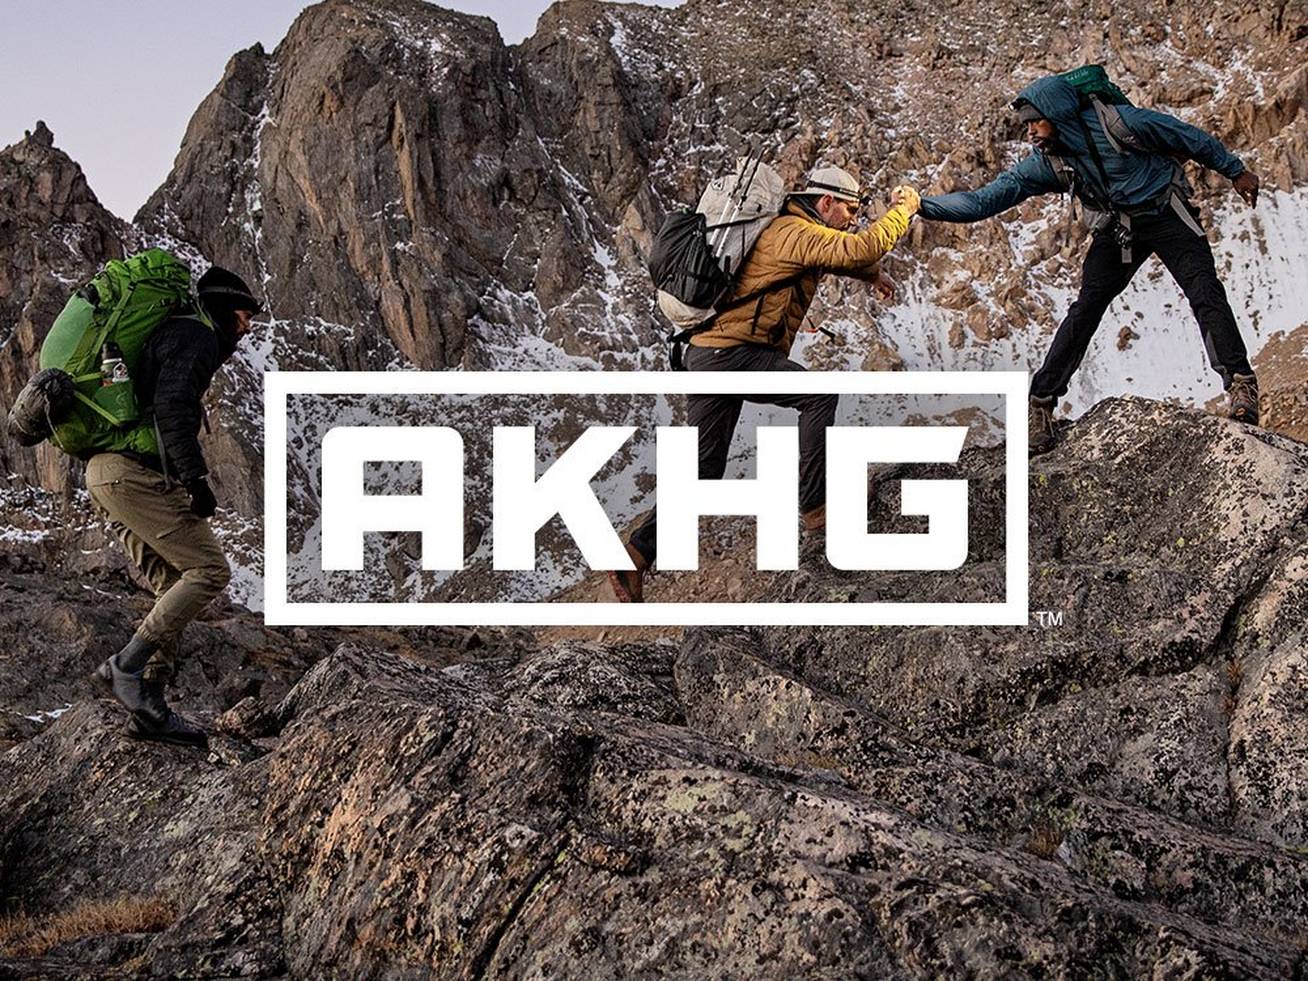 AKHG logo over an image of people climbing a mountain